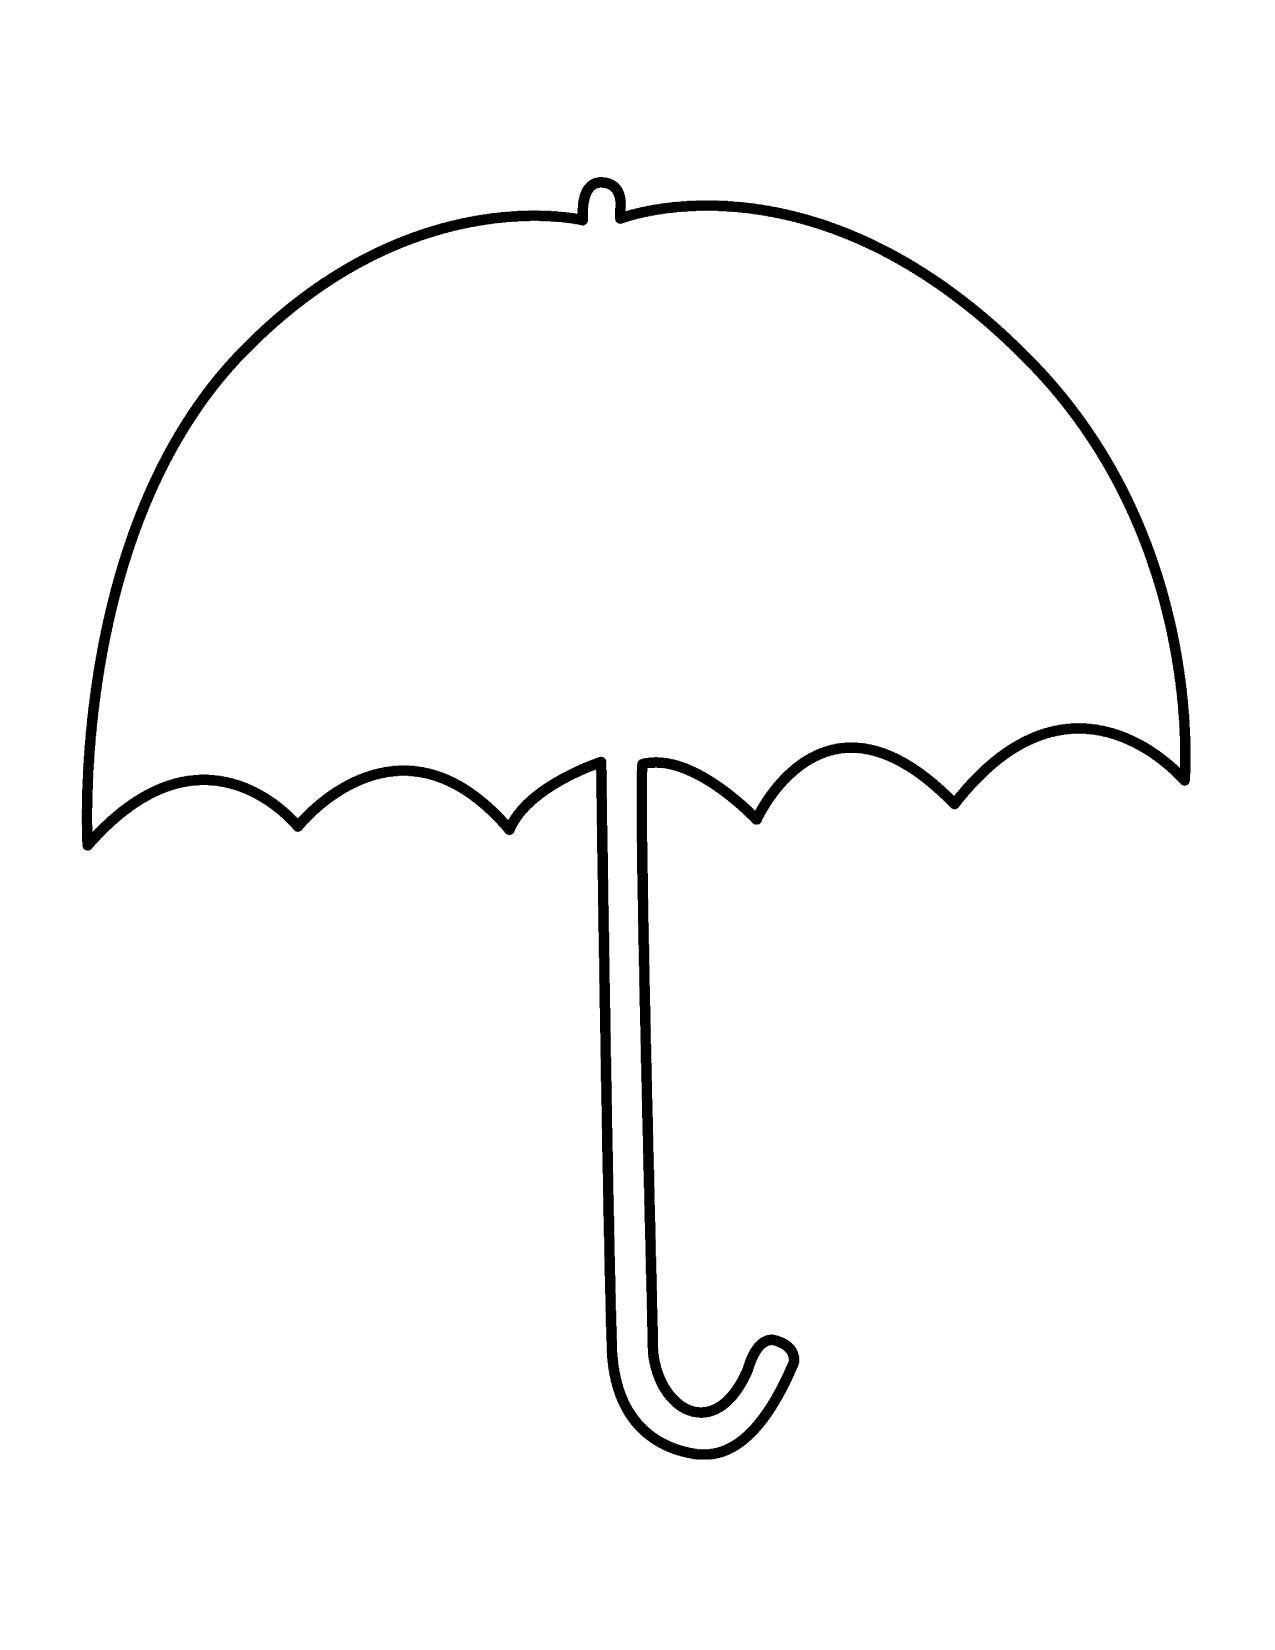 Free Printable Umbrella Template, Download Free Clip Art